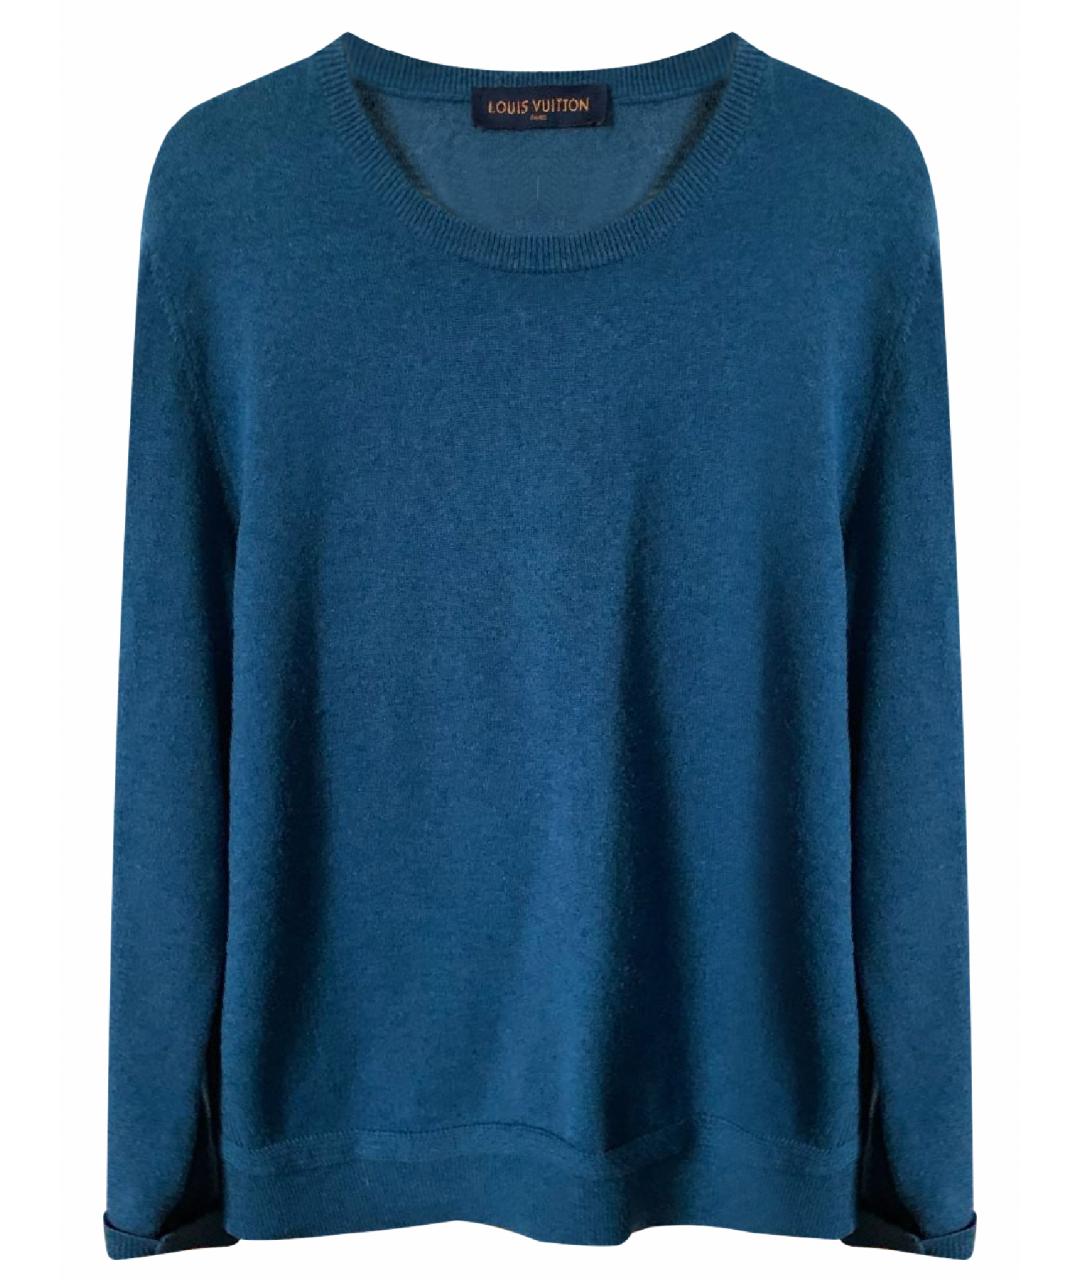 LOUIS VUITTON PRE-OWNED Синий кашемировый джемпер / свитер, фото 1